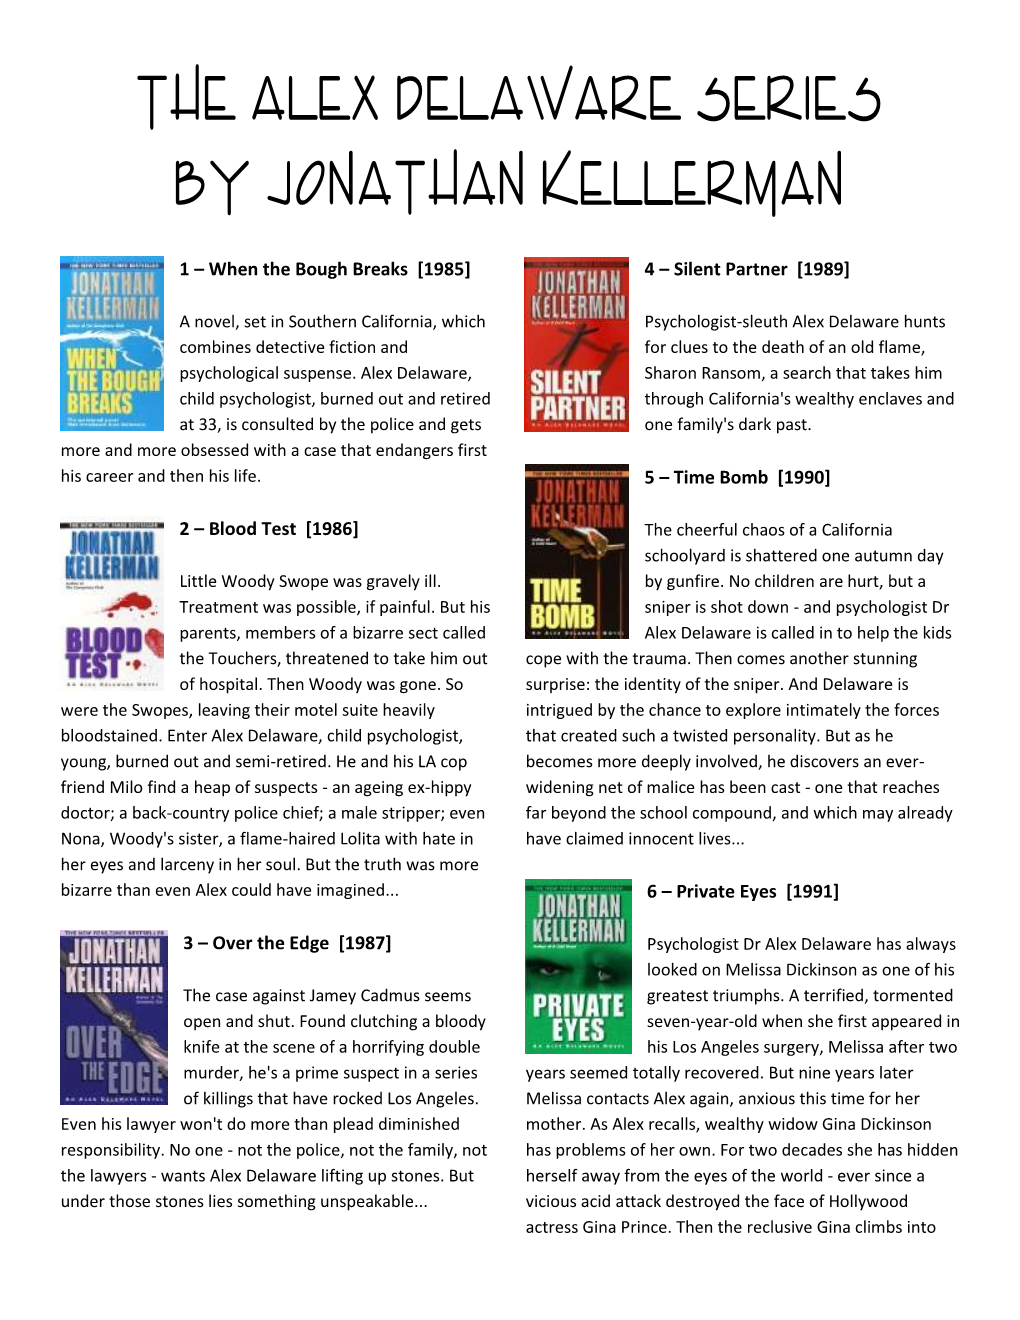 The Alex Delaware Series by Jonathan Kellerman